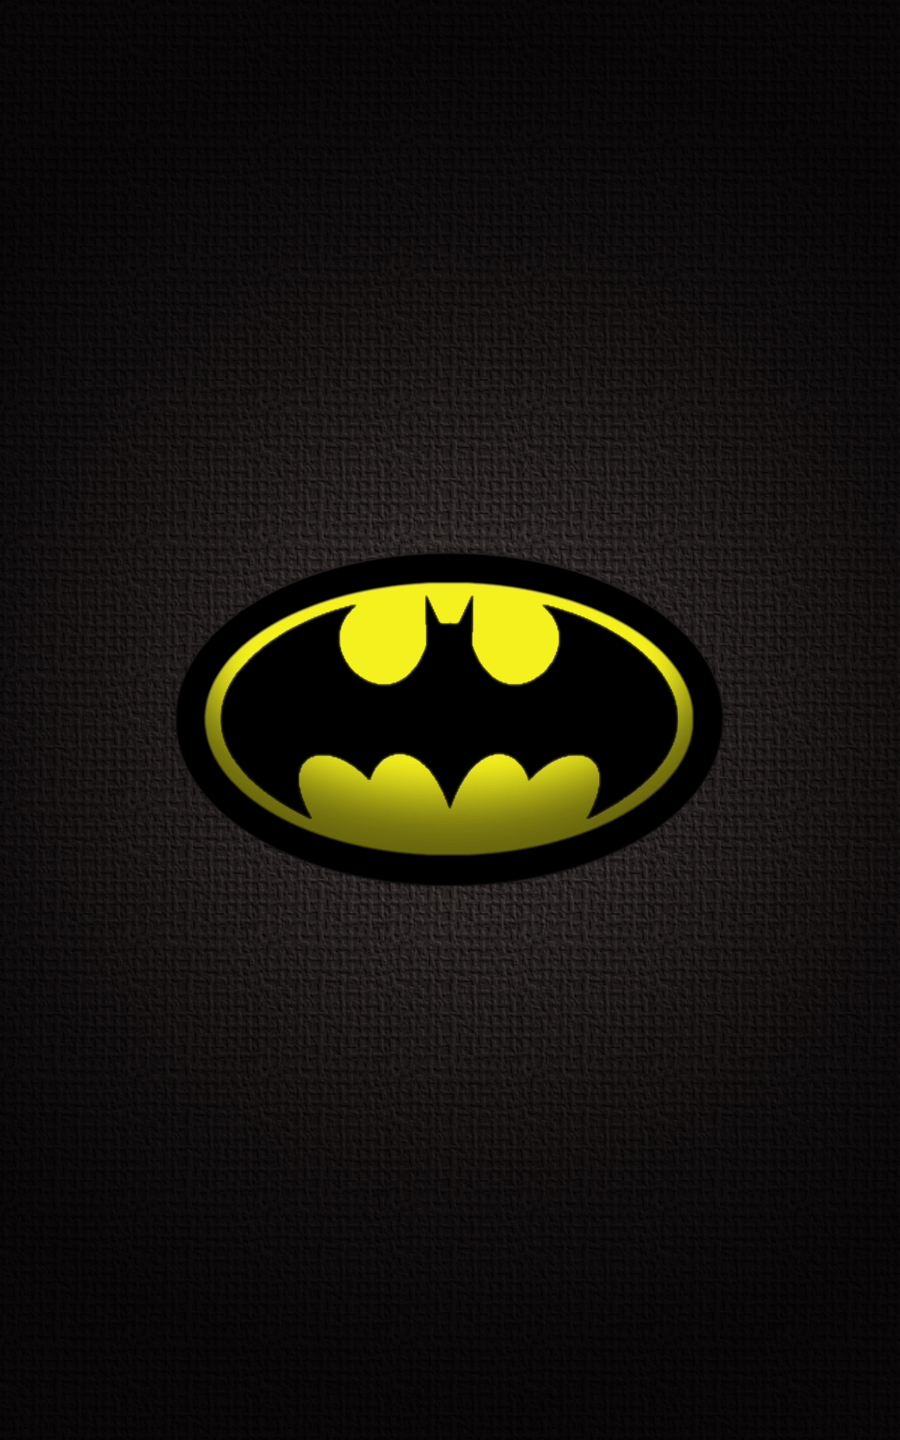 Batman Symbol Mobile Wallpaper Free Batman Symbol Mobile Background